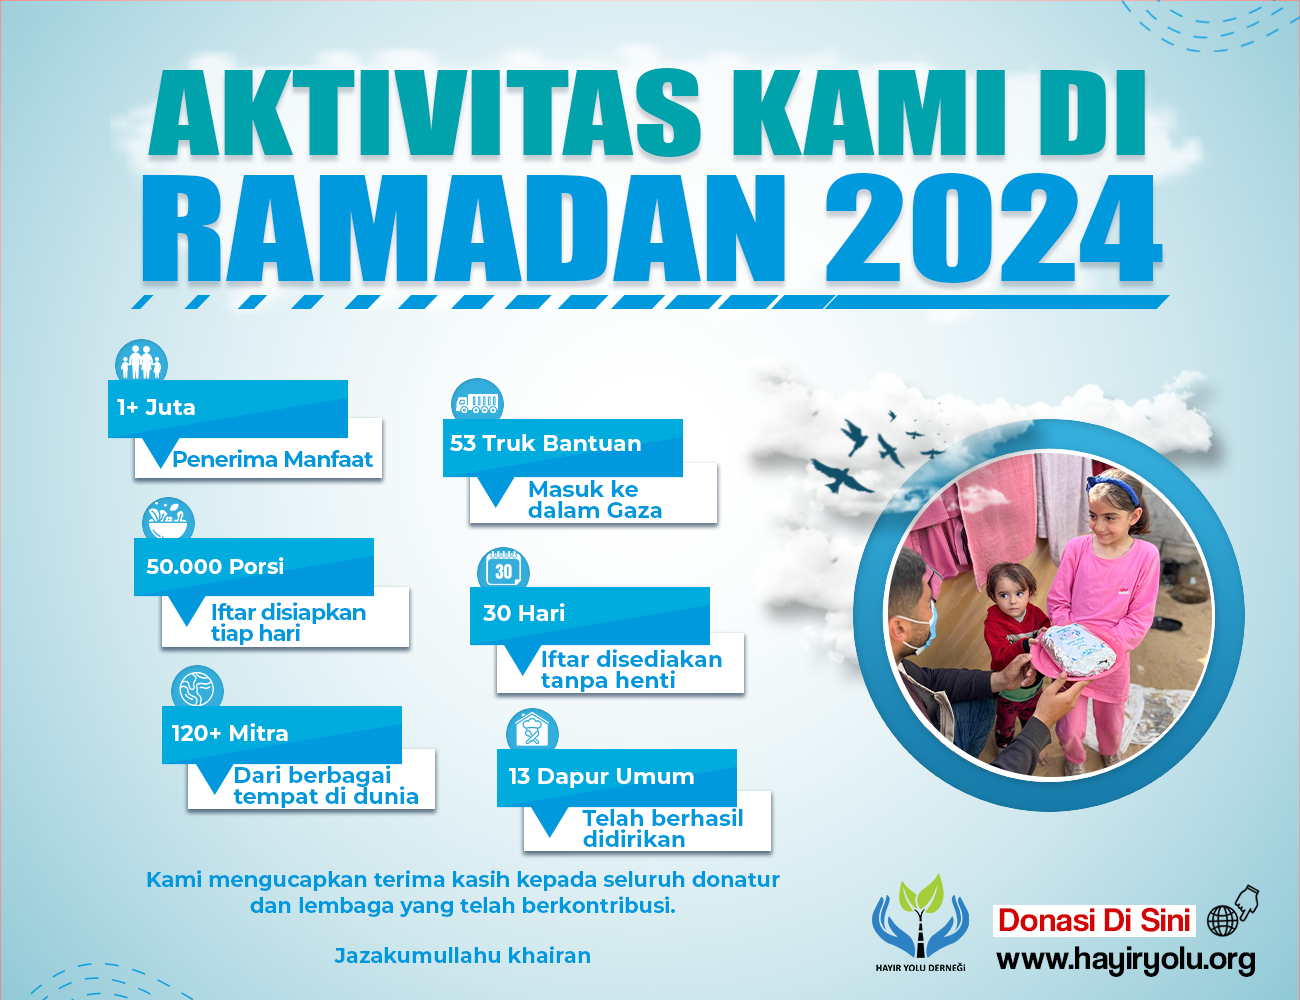 Aktivitas Kami di Ramadan 2024